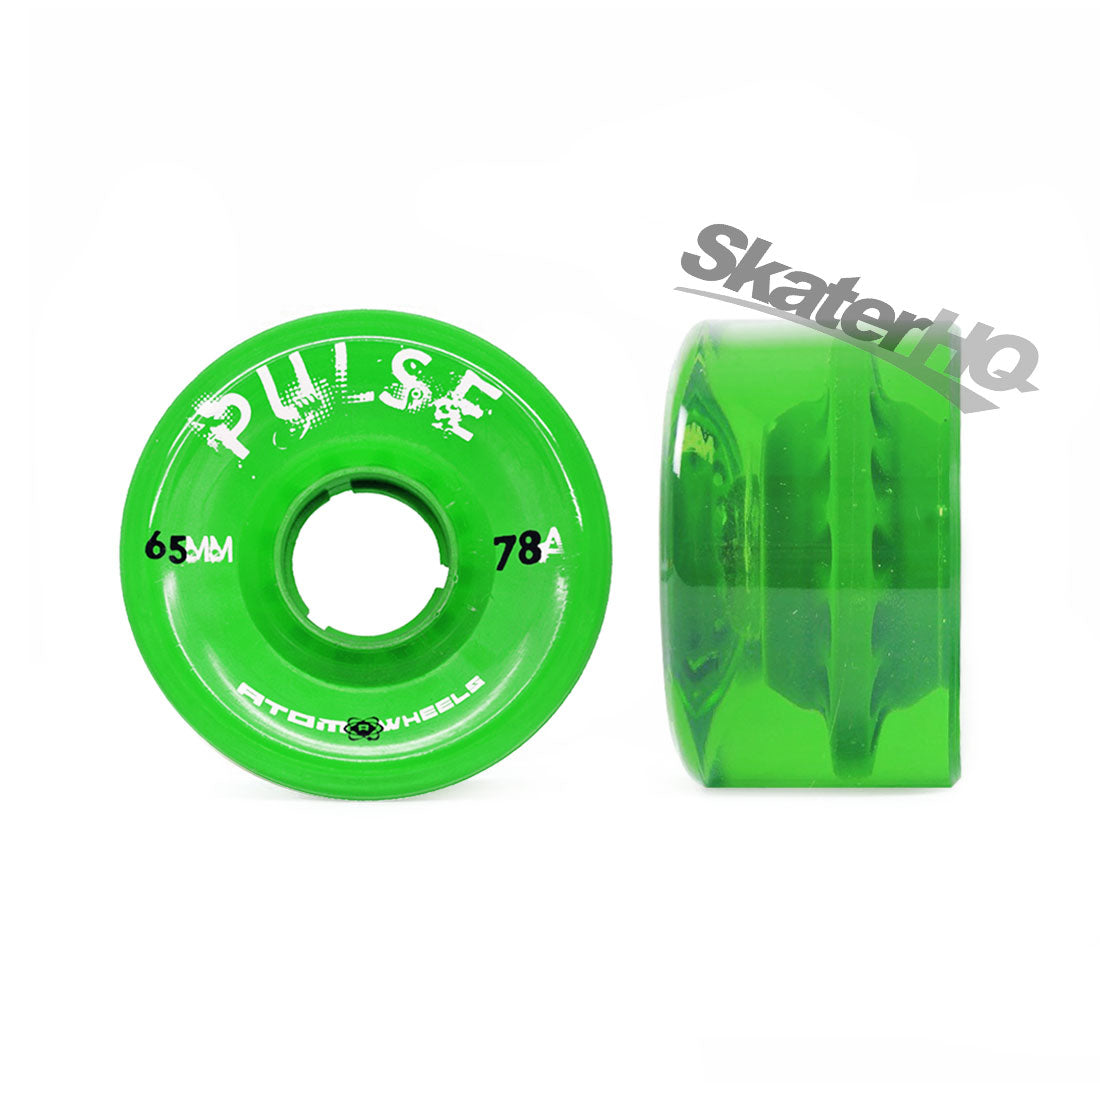 Atom Pulse 65x38mm 78a 4pk - Green Roller Skate Wheels